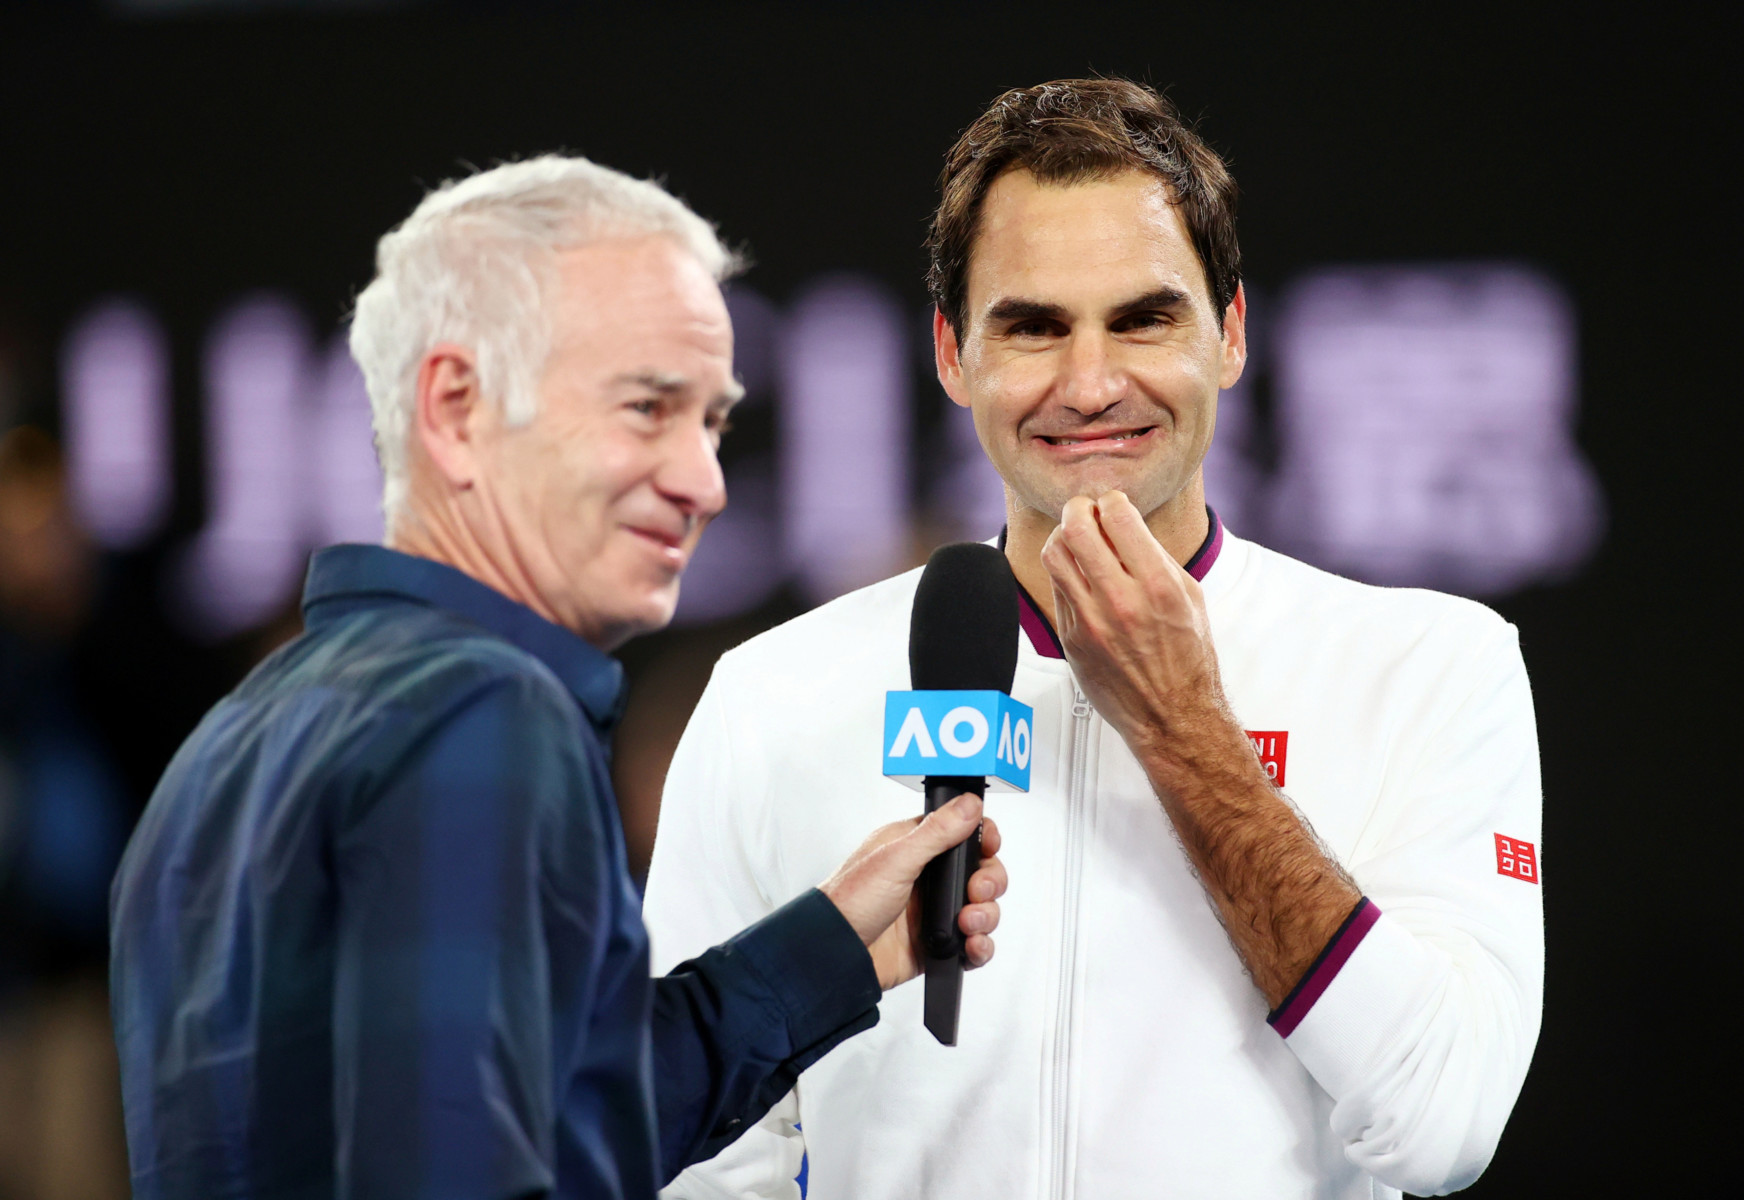 , Roger Federer cannot be written off yet as retirement fears rise following major knee surgery, warns John McEnroe